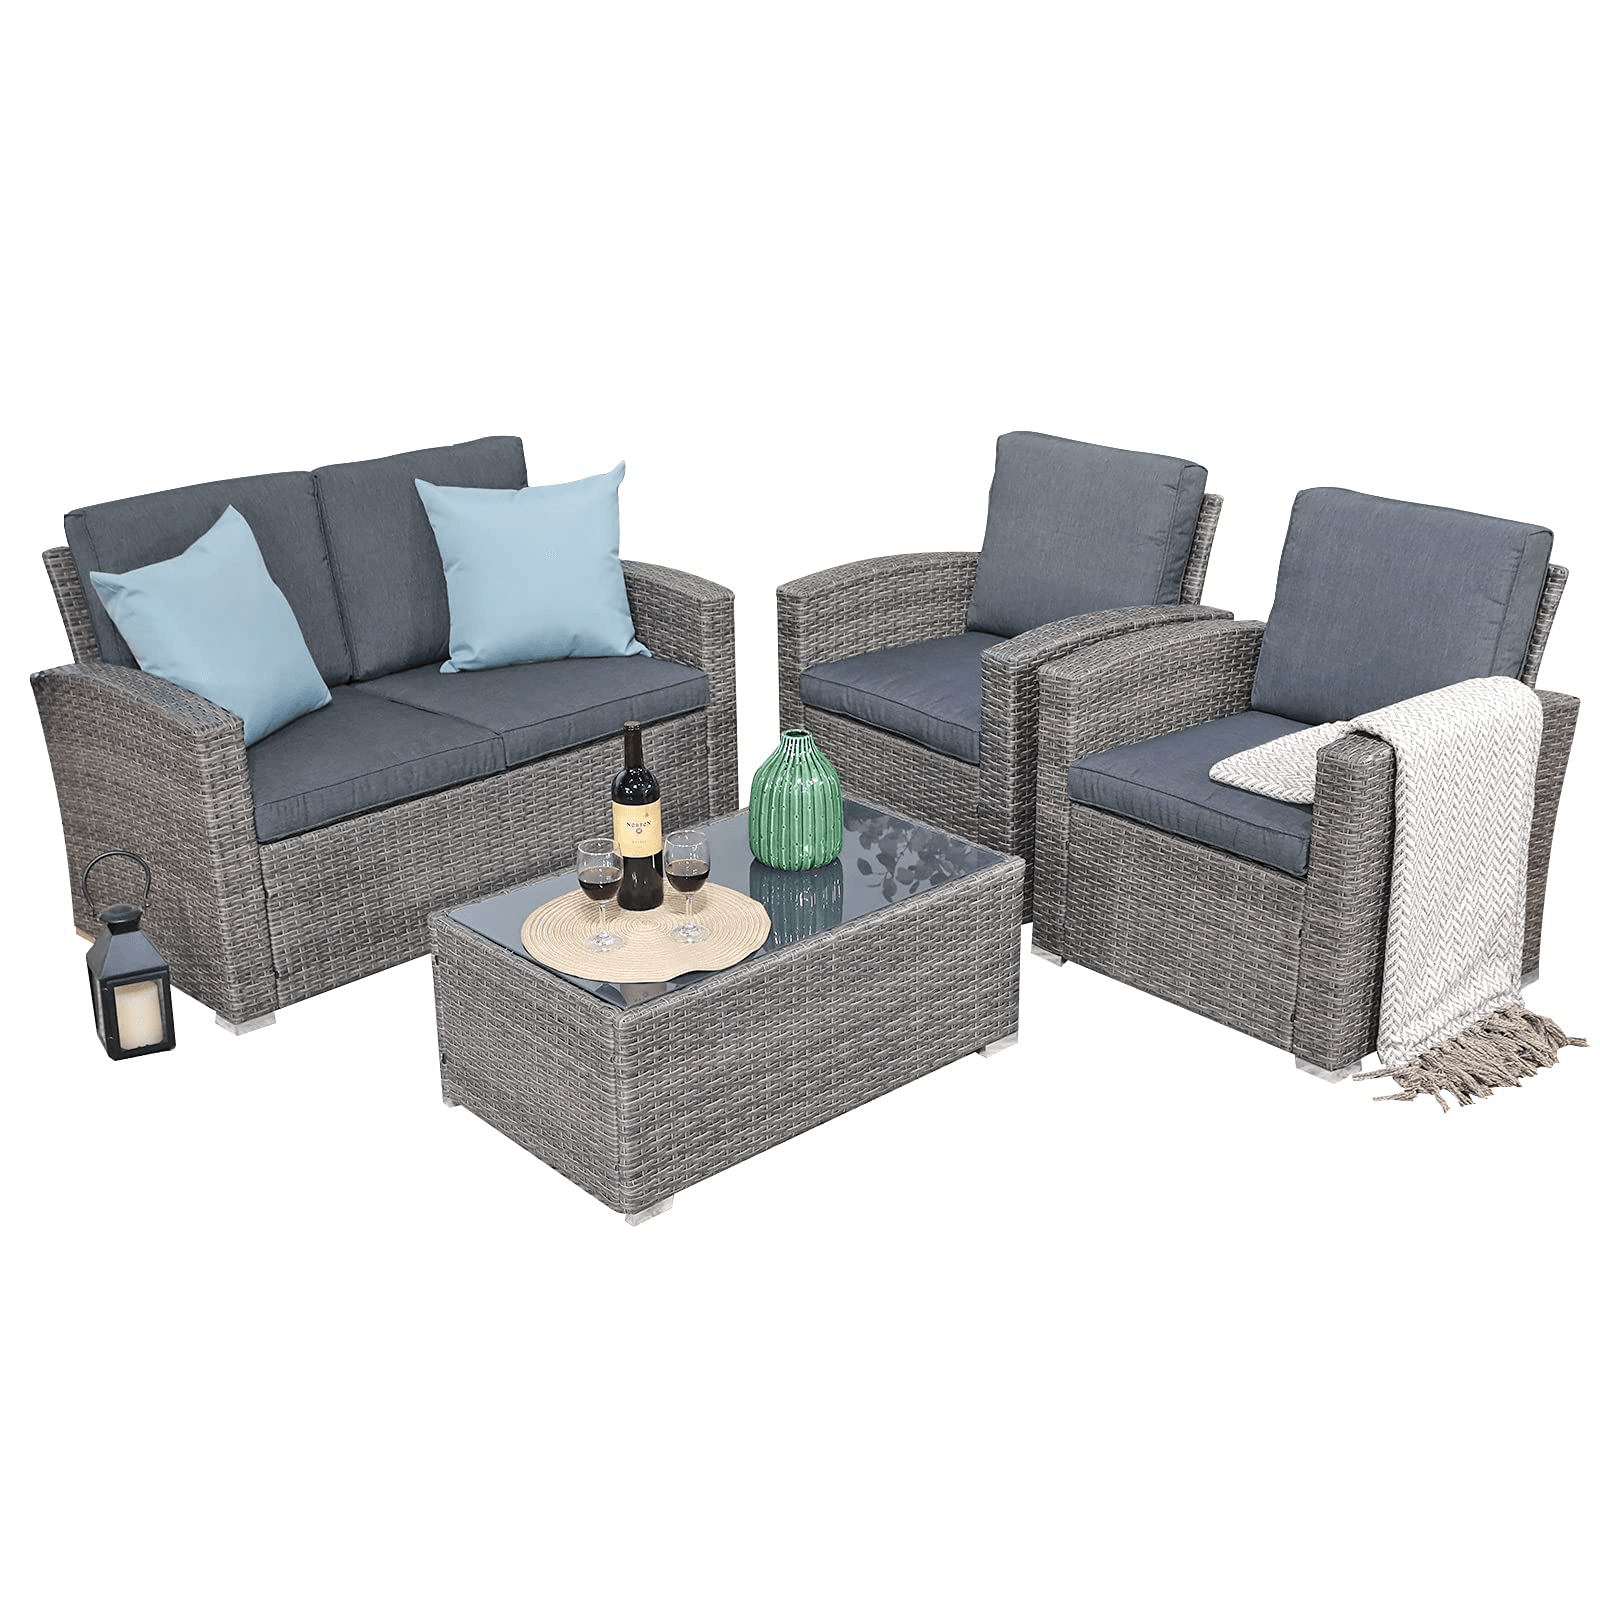 4pcs Wicker Outdoor Patio Furniture Set